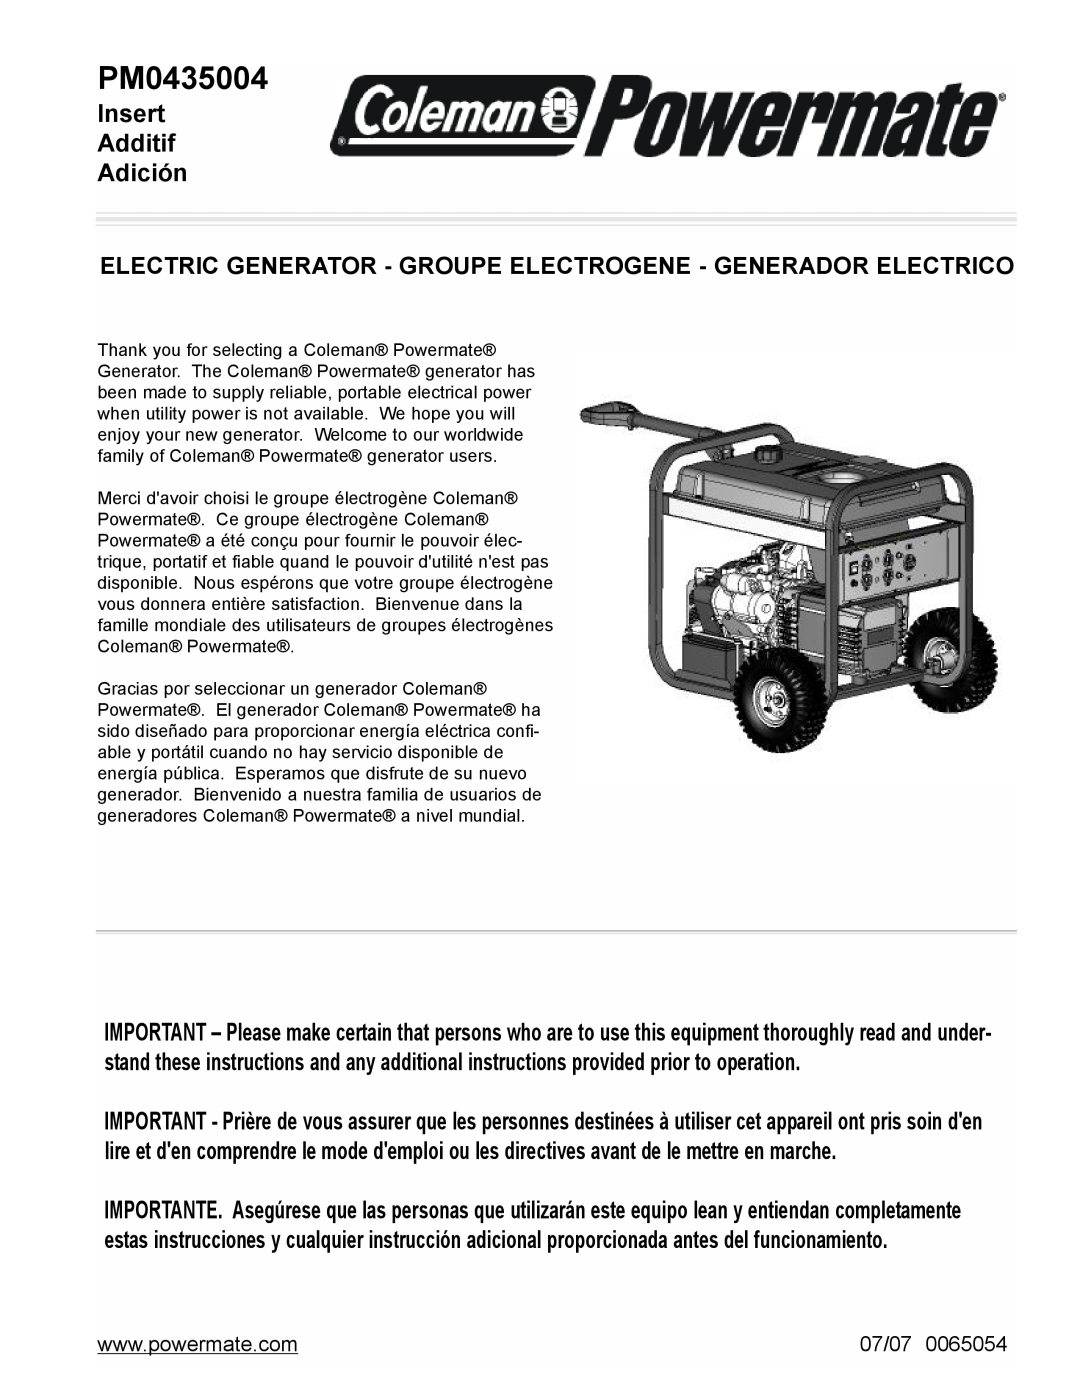 Powermate PM0435004 manual Insert Additif Adición, Electric Generator - Groupe Electrogene - Generador Electrico, 07/07 